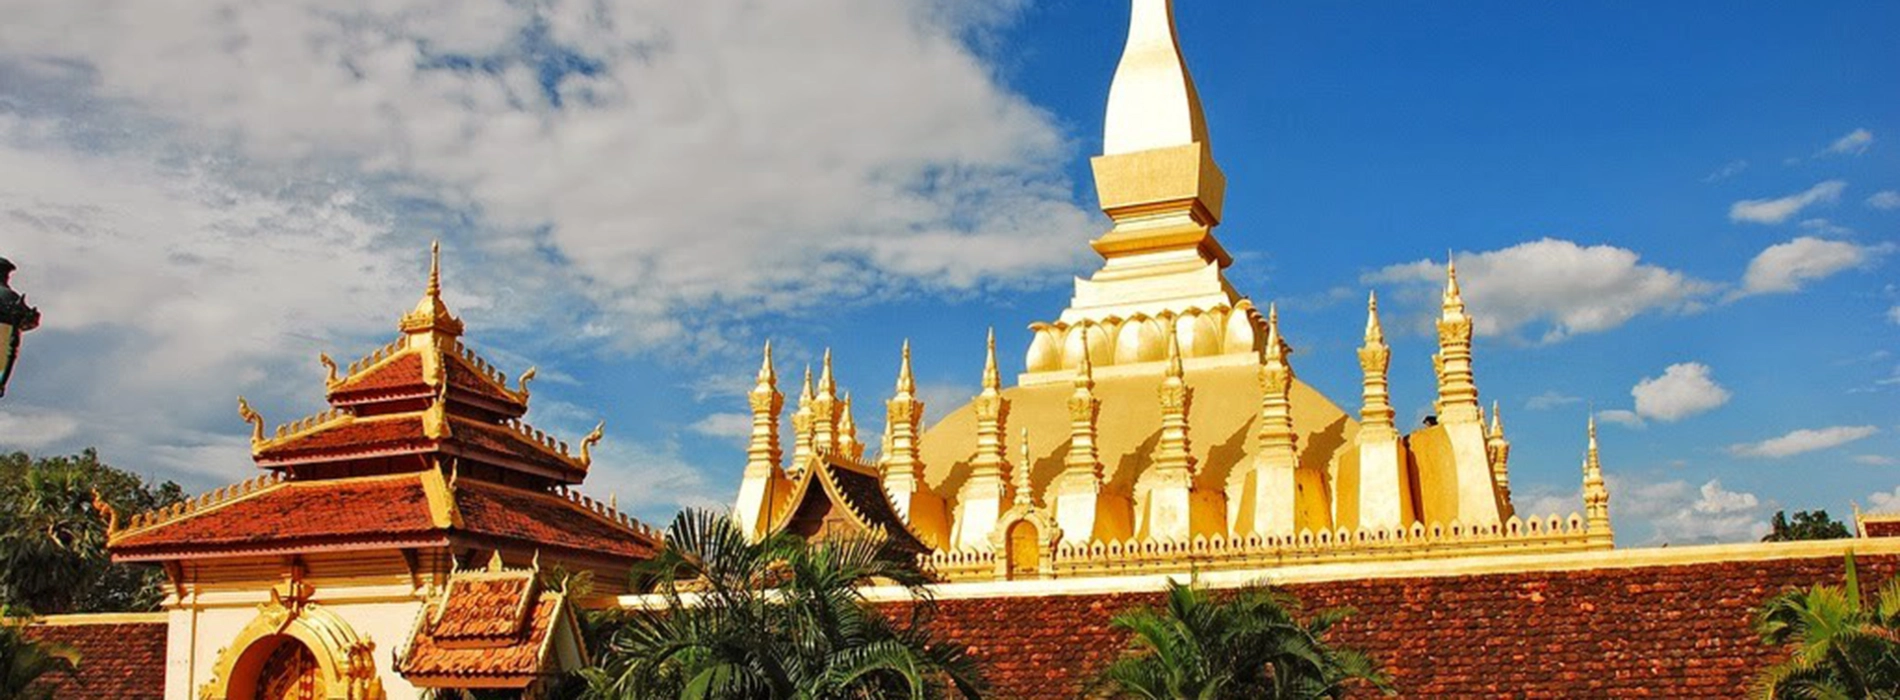 TRAVELING AND EXPLORING LAOS - CAMBODIA